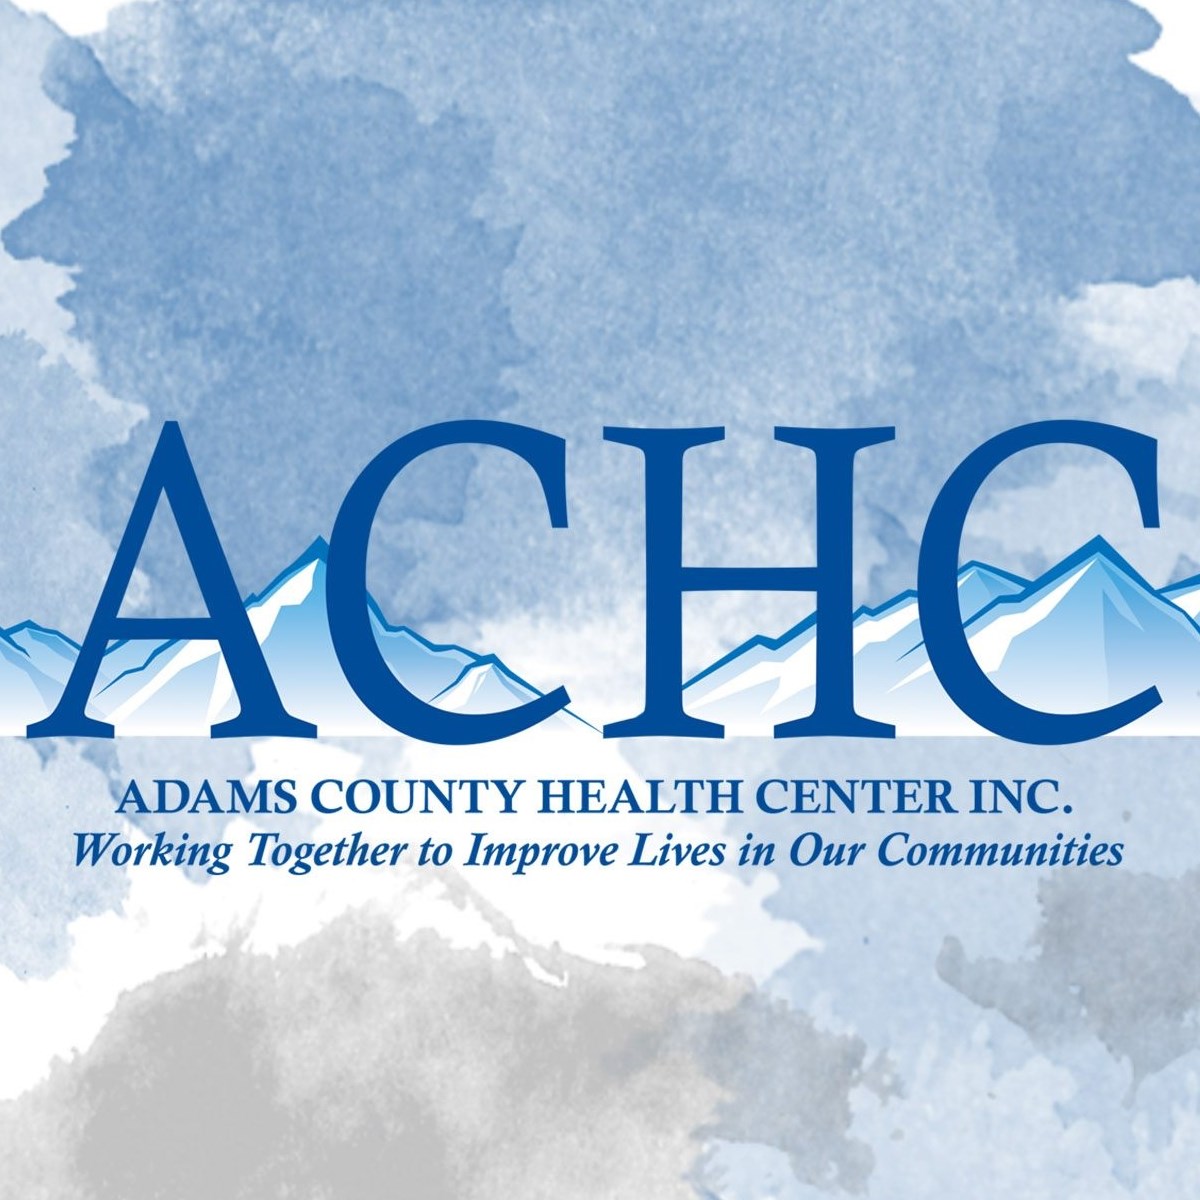 Adams County Health Center